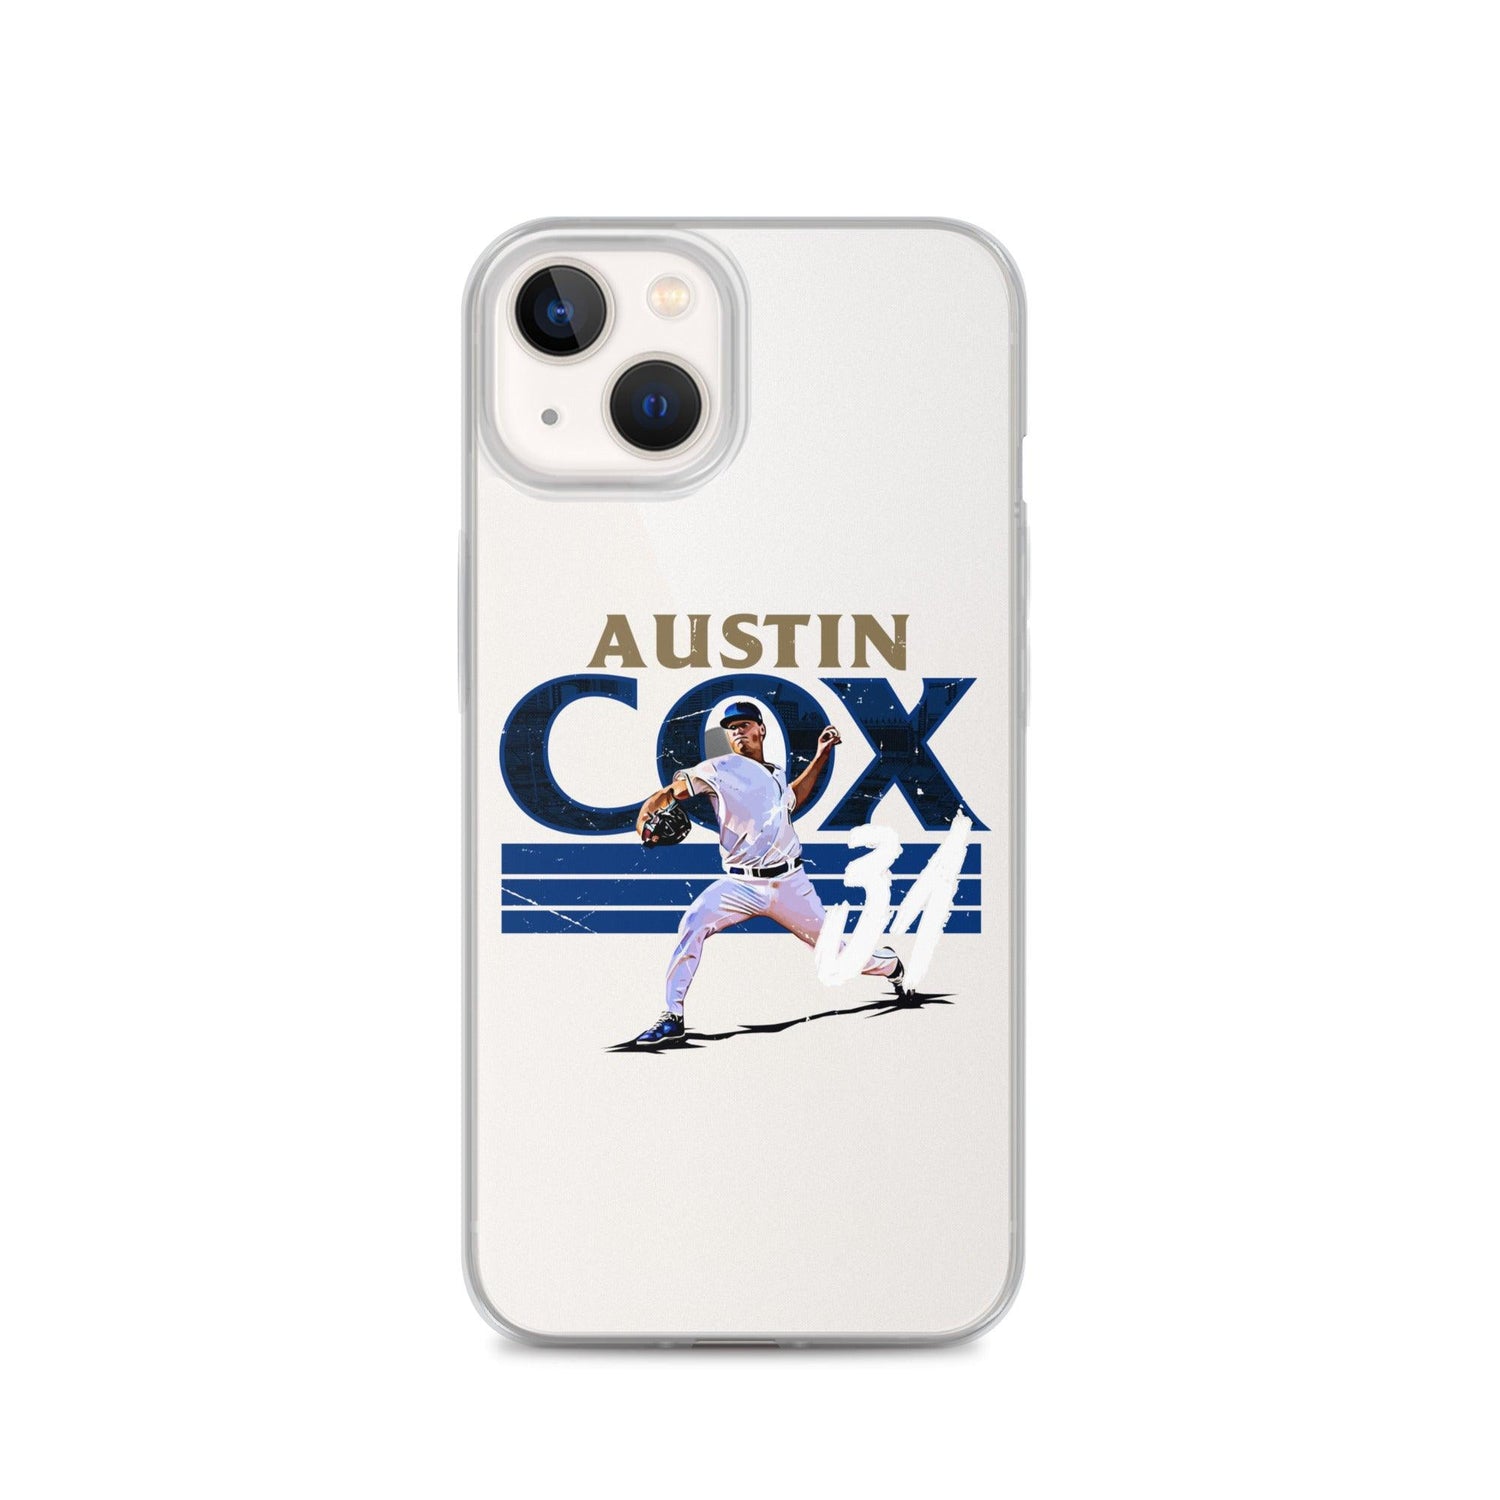 Austin Cox "Strike" iPhone Case - Fan Arch